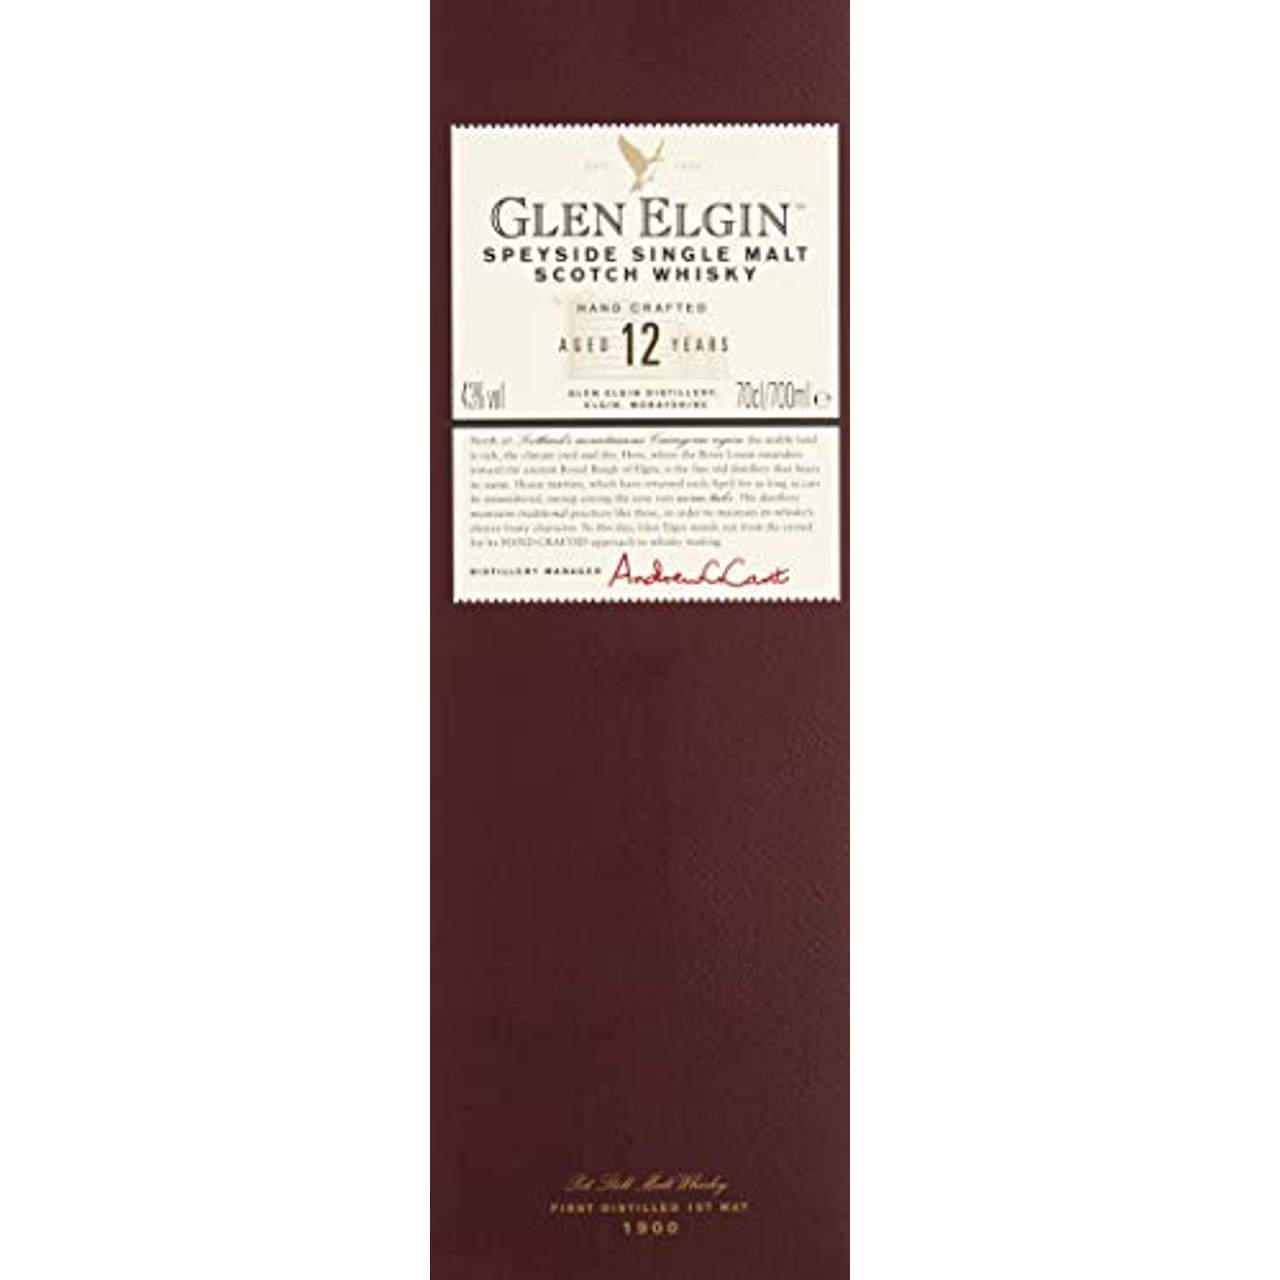 Glen Elgin 12 Jahre Speyside Single Malt Scotch Whisky